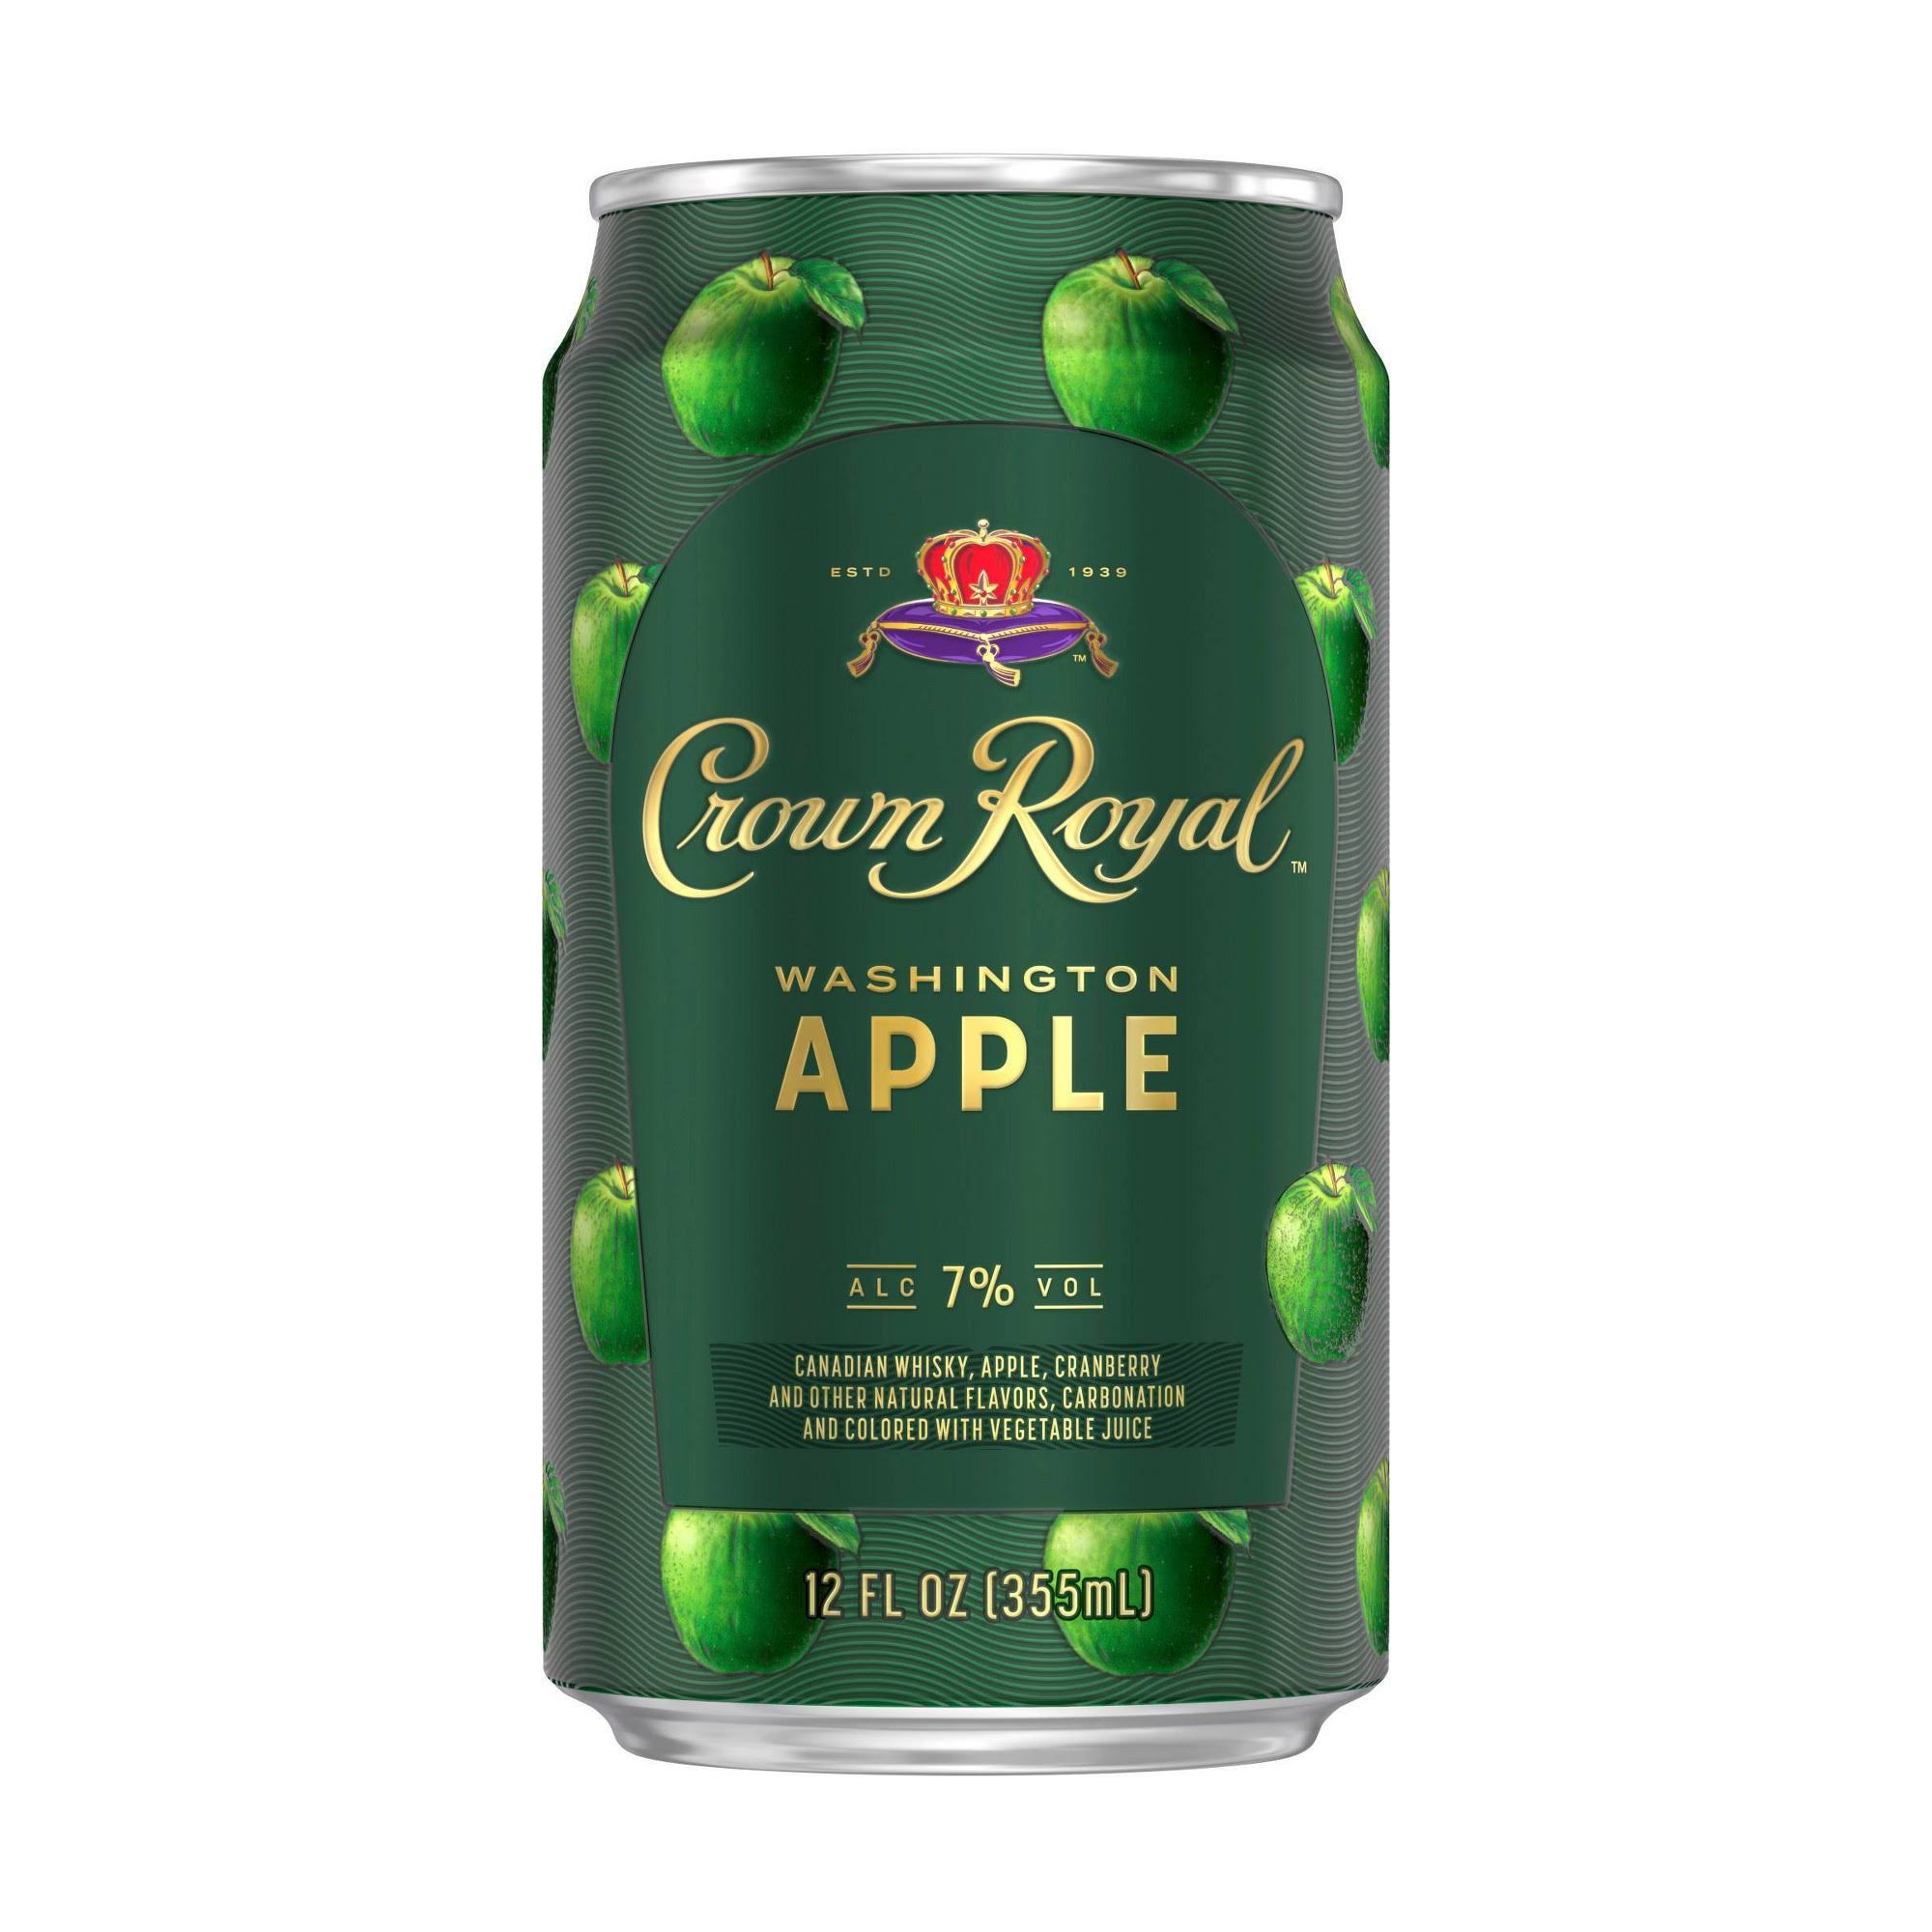 Crown Royal Washington Apple Canadian Whisky Cocktail